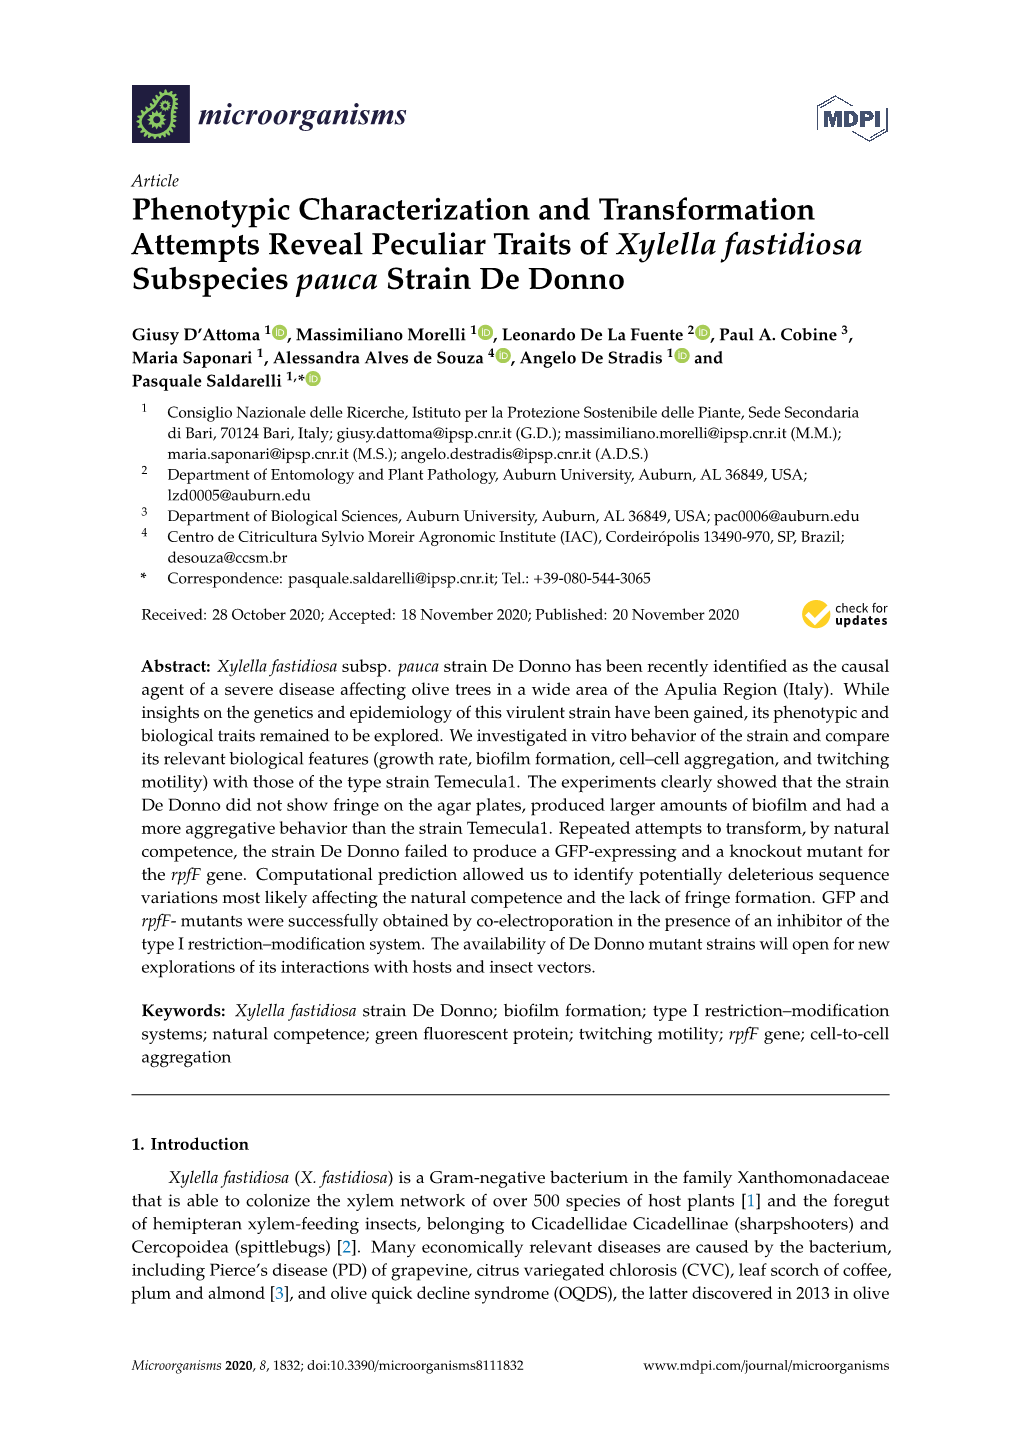 Phenotypic Characterization and Transformation Attempts Reveal Peculiar Traits of Xylella Fastidiosa Subspecies Pauca Strain De Donno